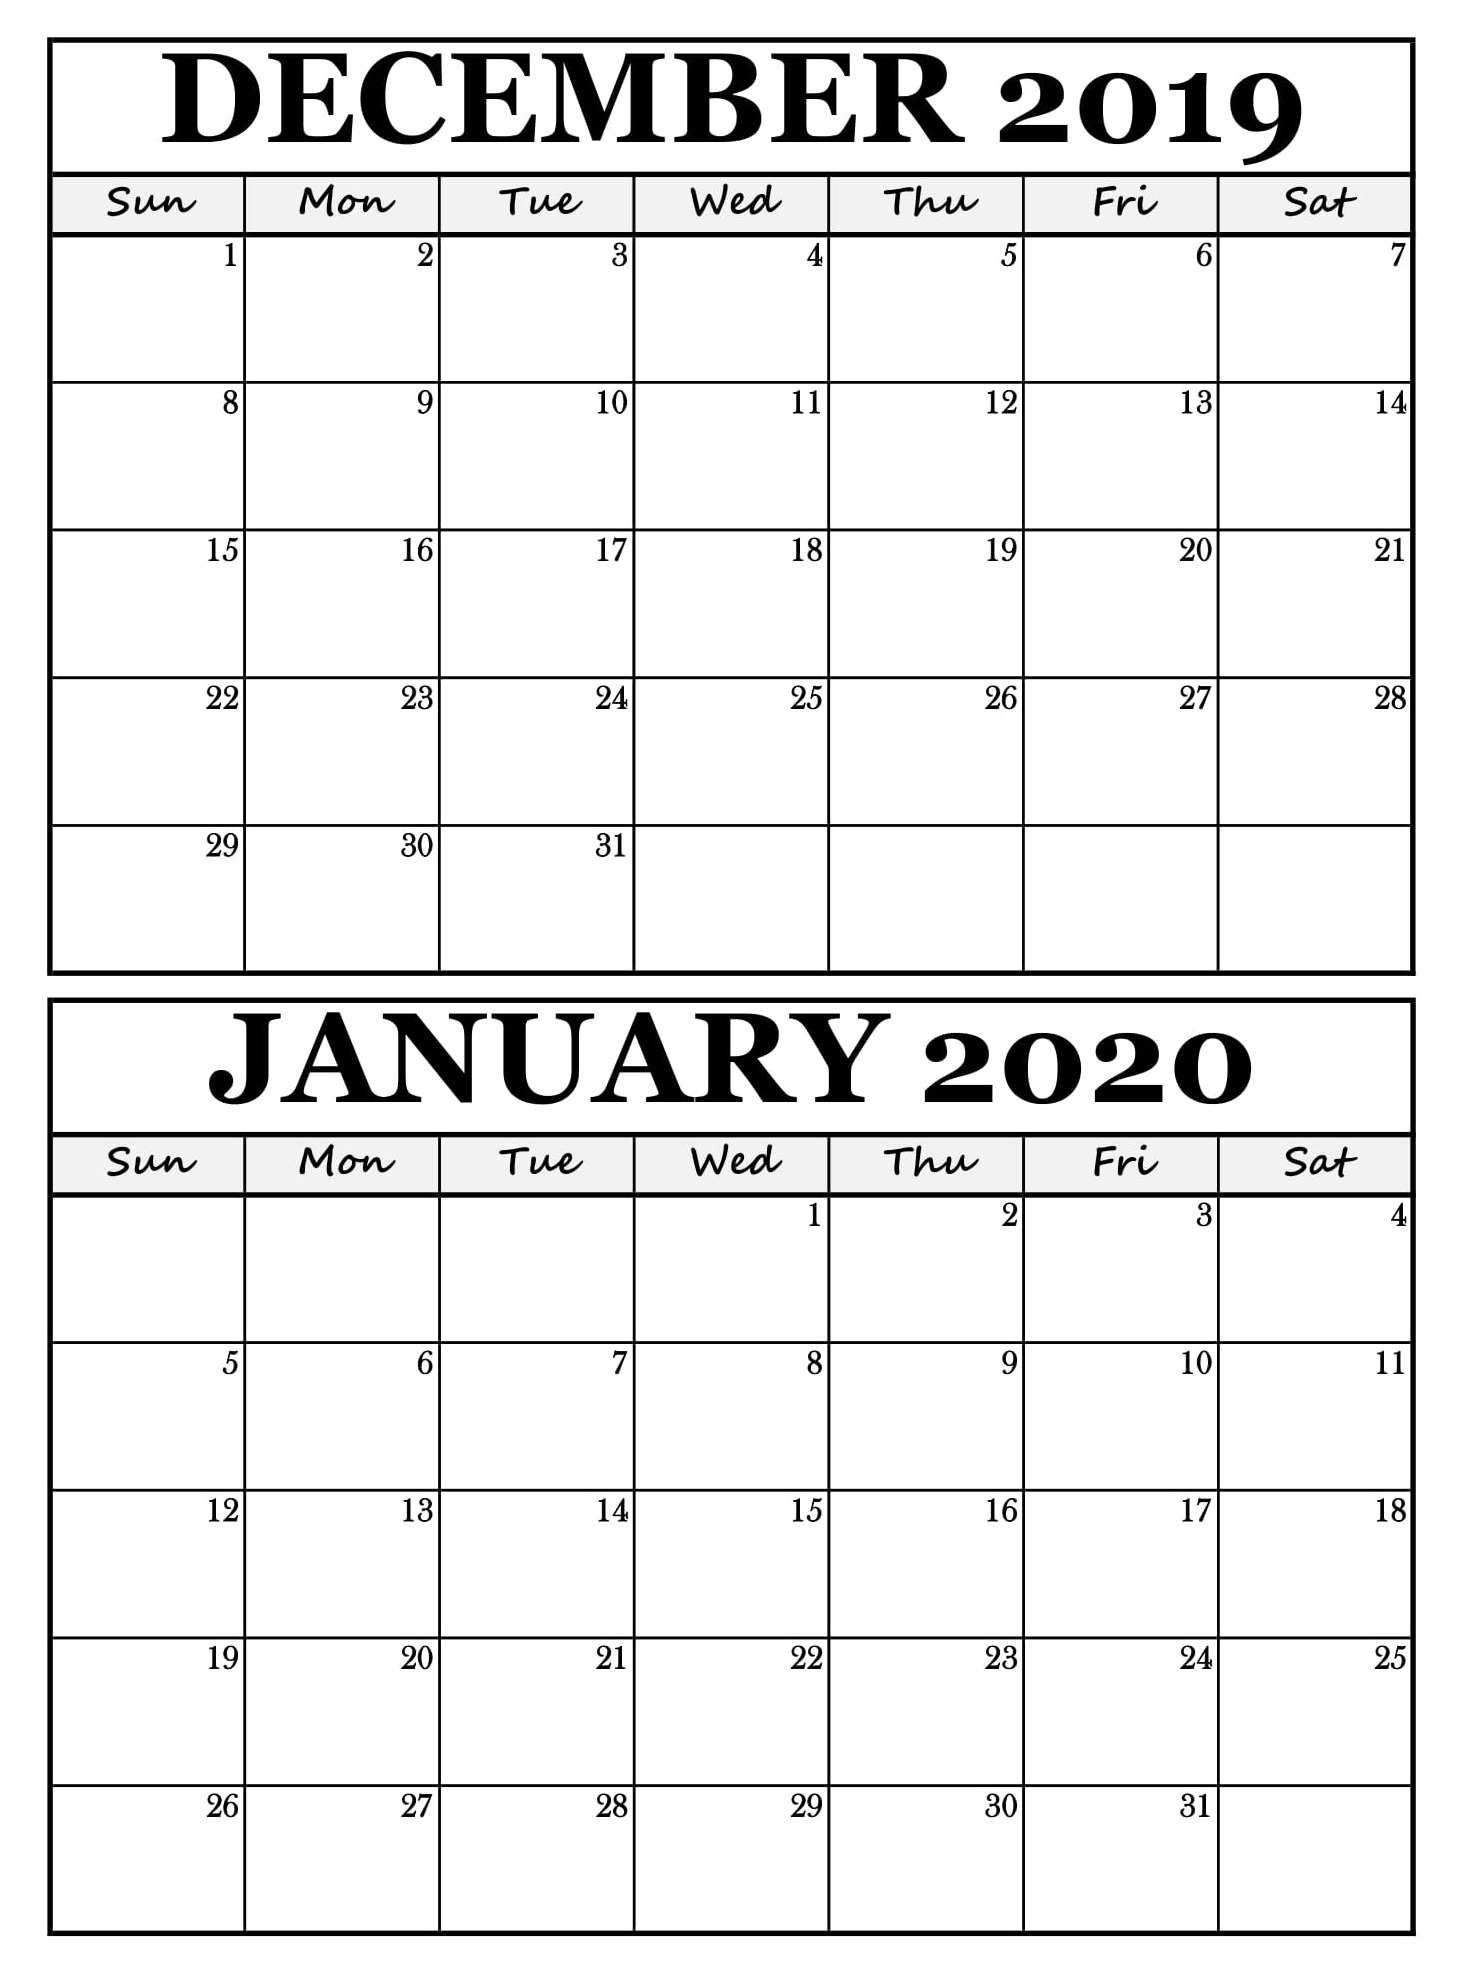 Calendar December 2019 January 2020 Template - 2019 Calendars For Students Education Calendar December 2020 Calendar In January 2021 Calendar